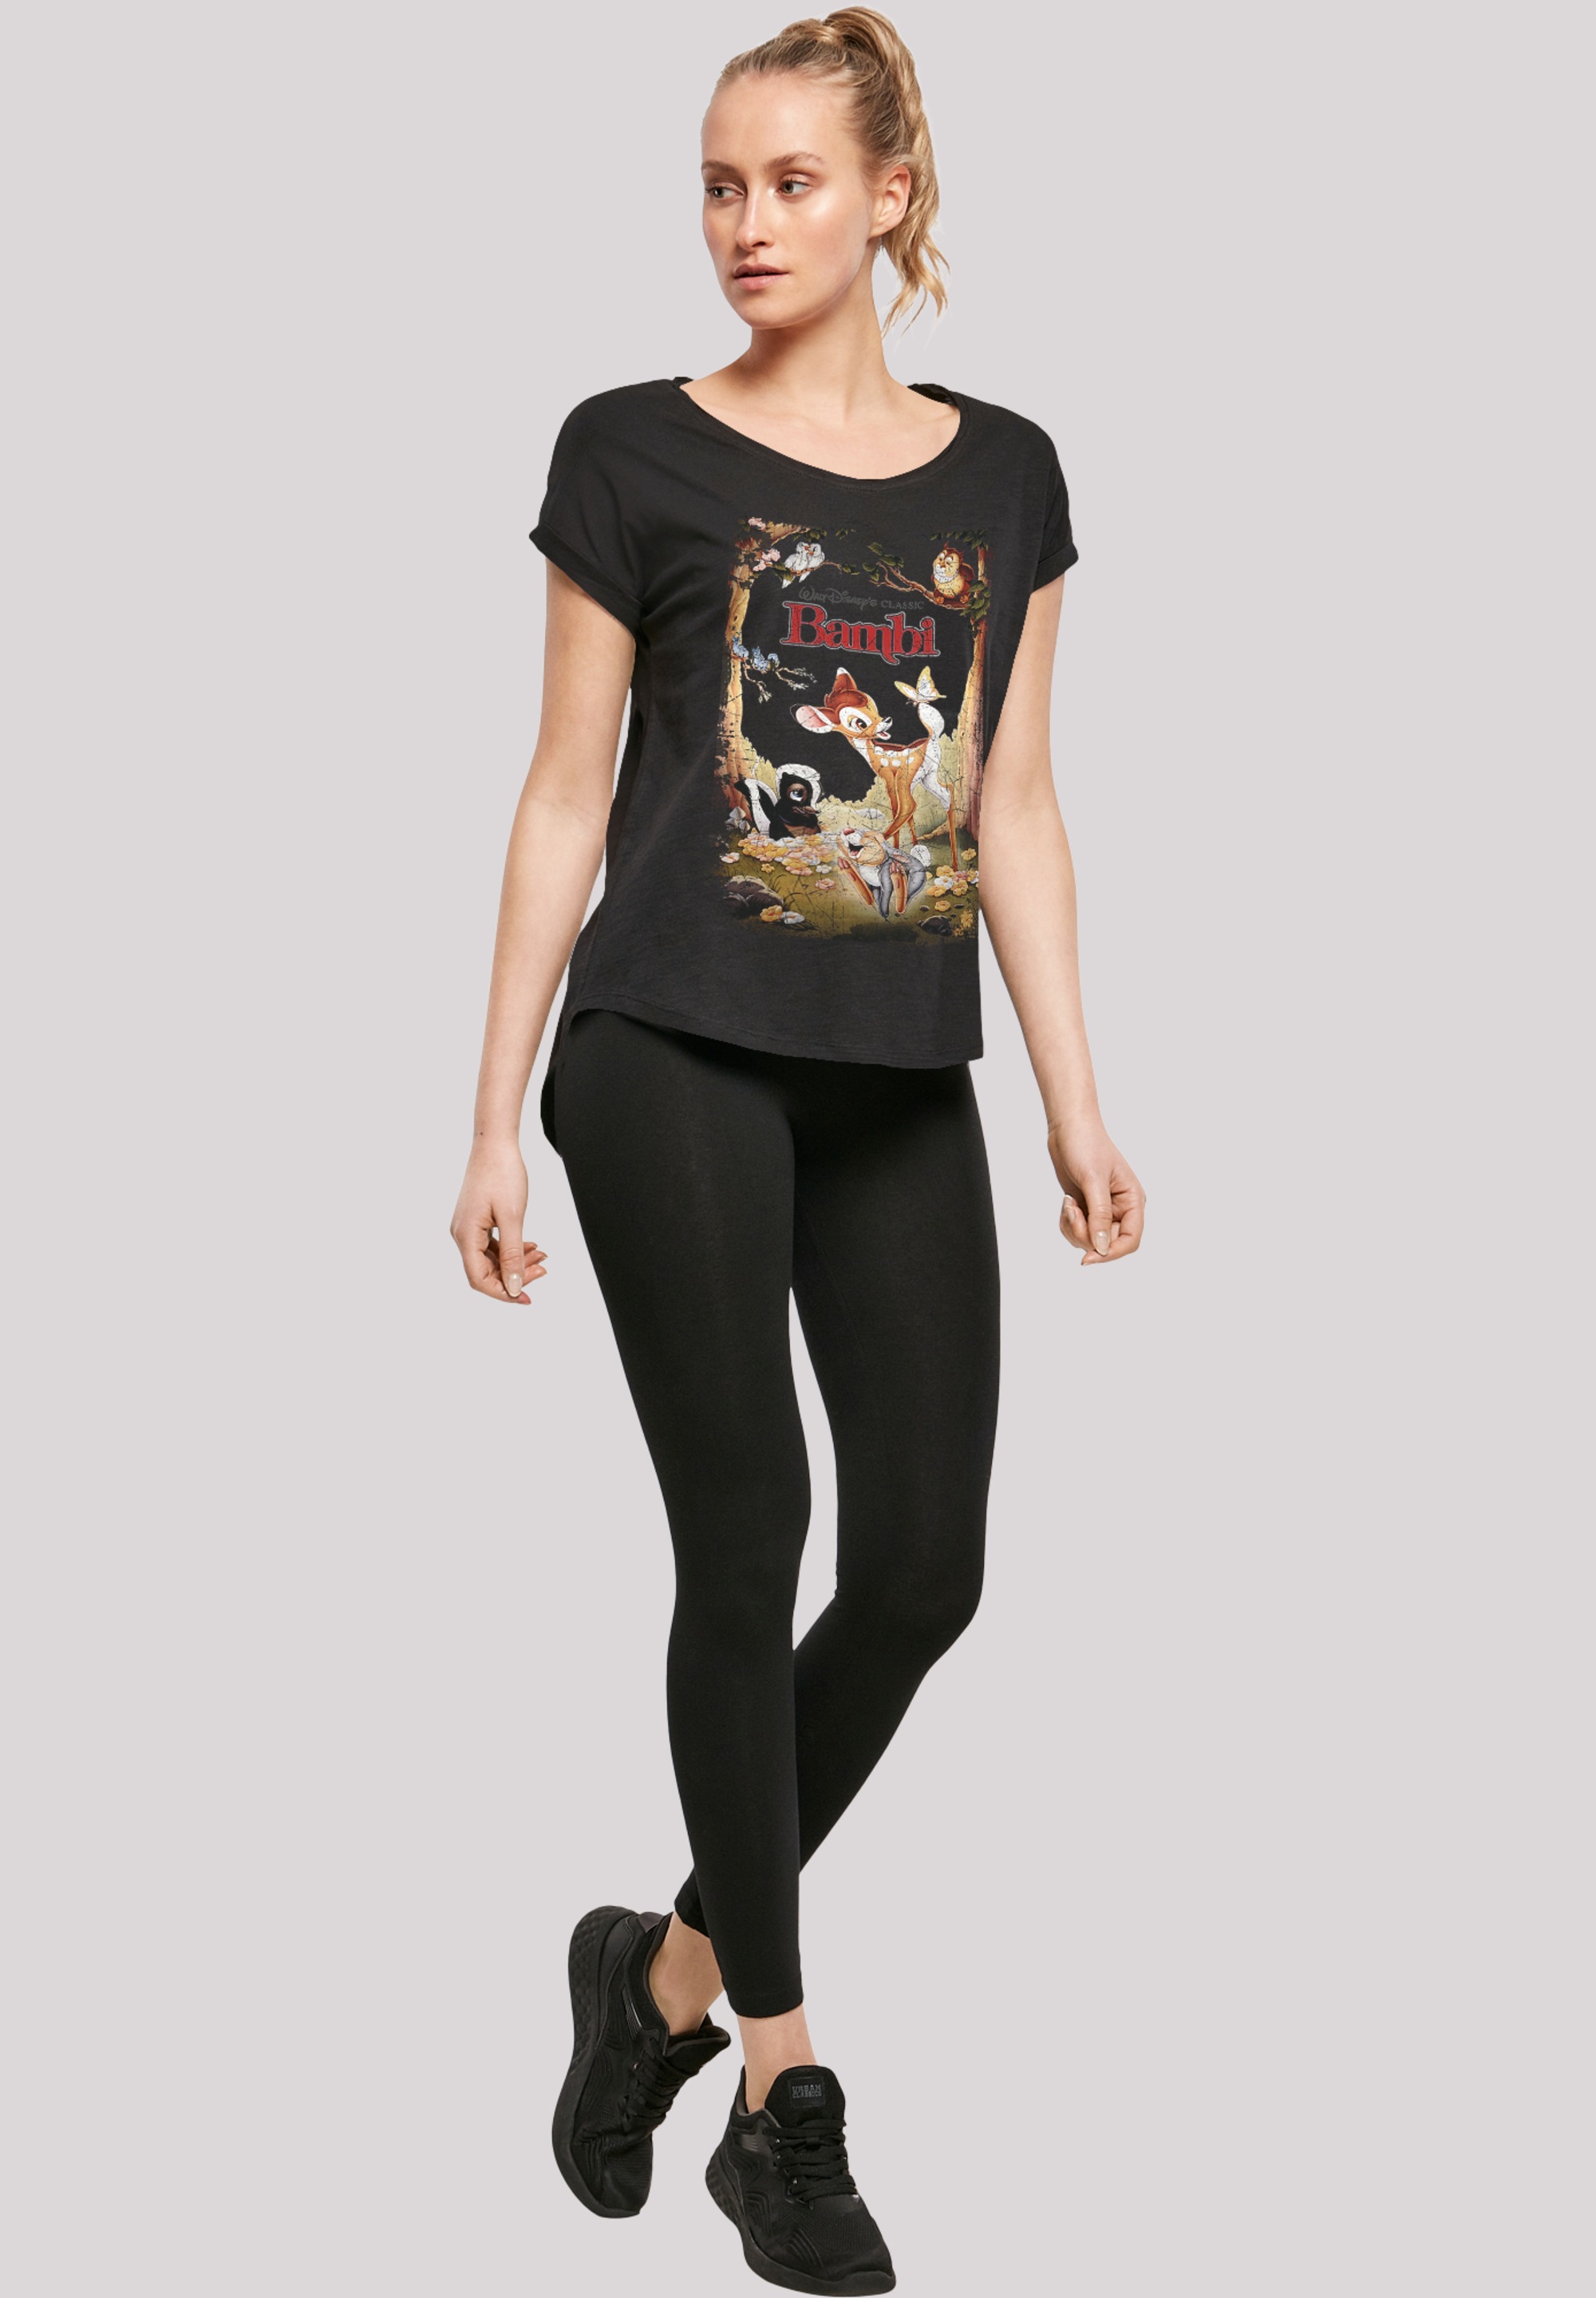 »Bambi T-Shirt I\'m shoppen Print Retro F4NT4STIC walking | Poster«,